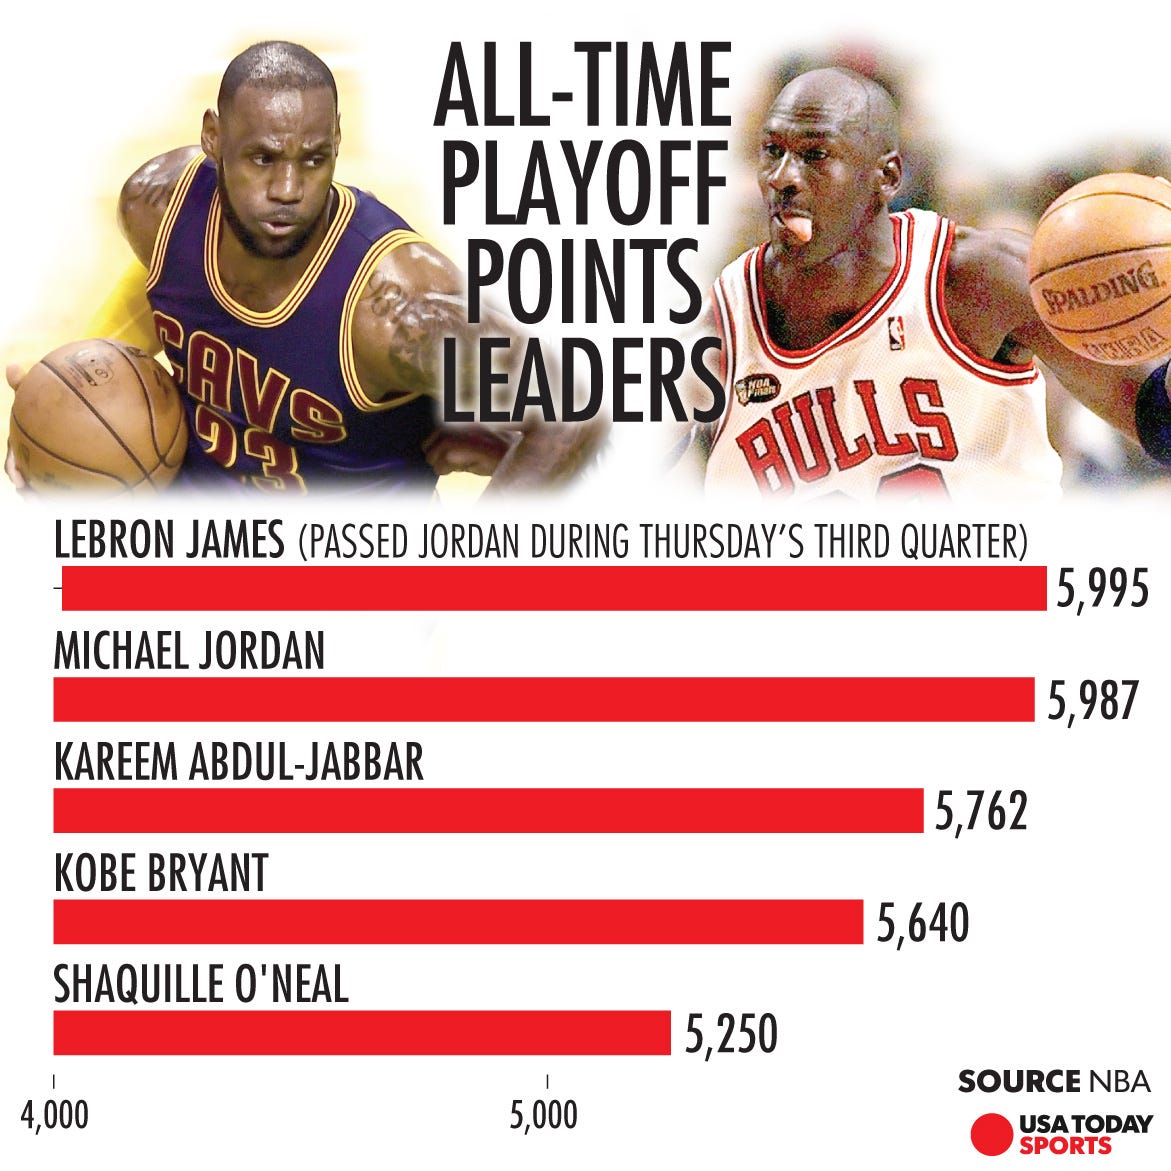 jordan michael lebron james playoff nba points passes most pass scorer years cavaliers rebounds